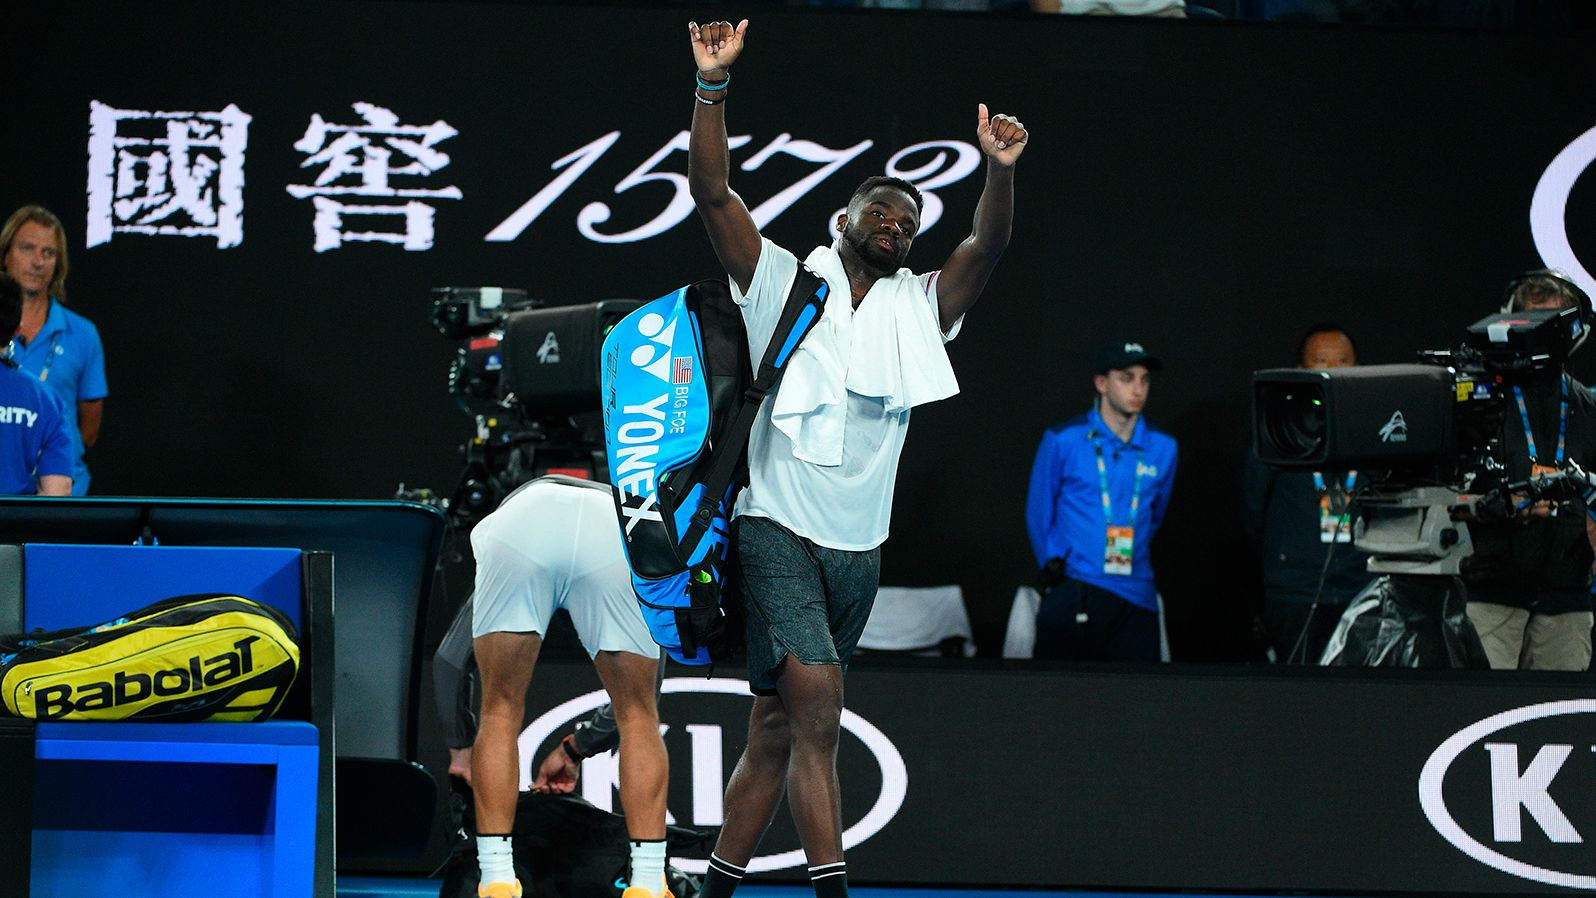 Tiafoe reached the Australian Open quarterfinal in 2019 but was beaten by Nadal. 